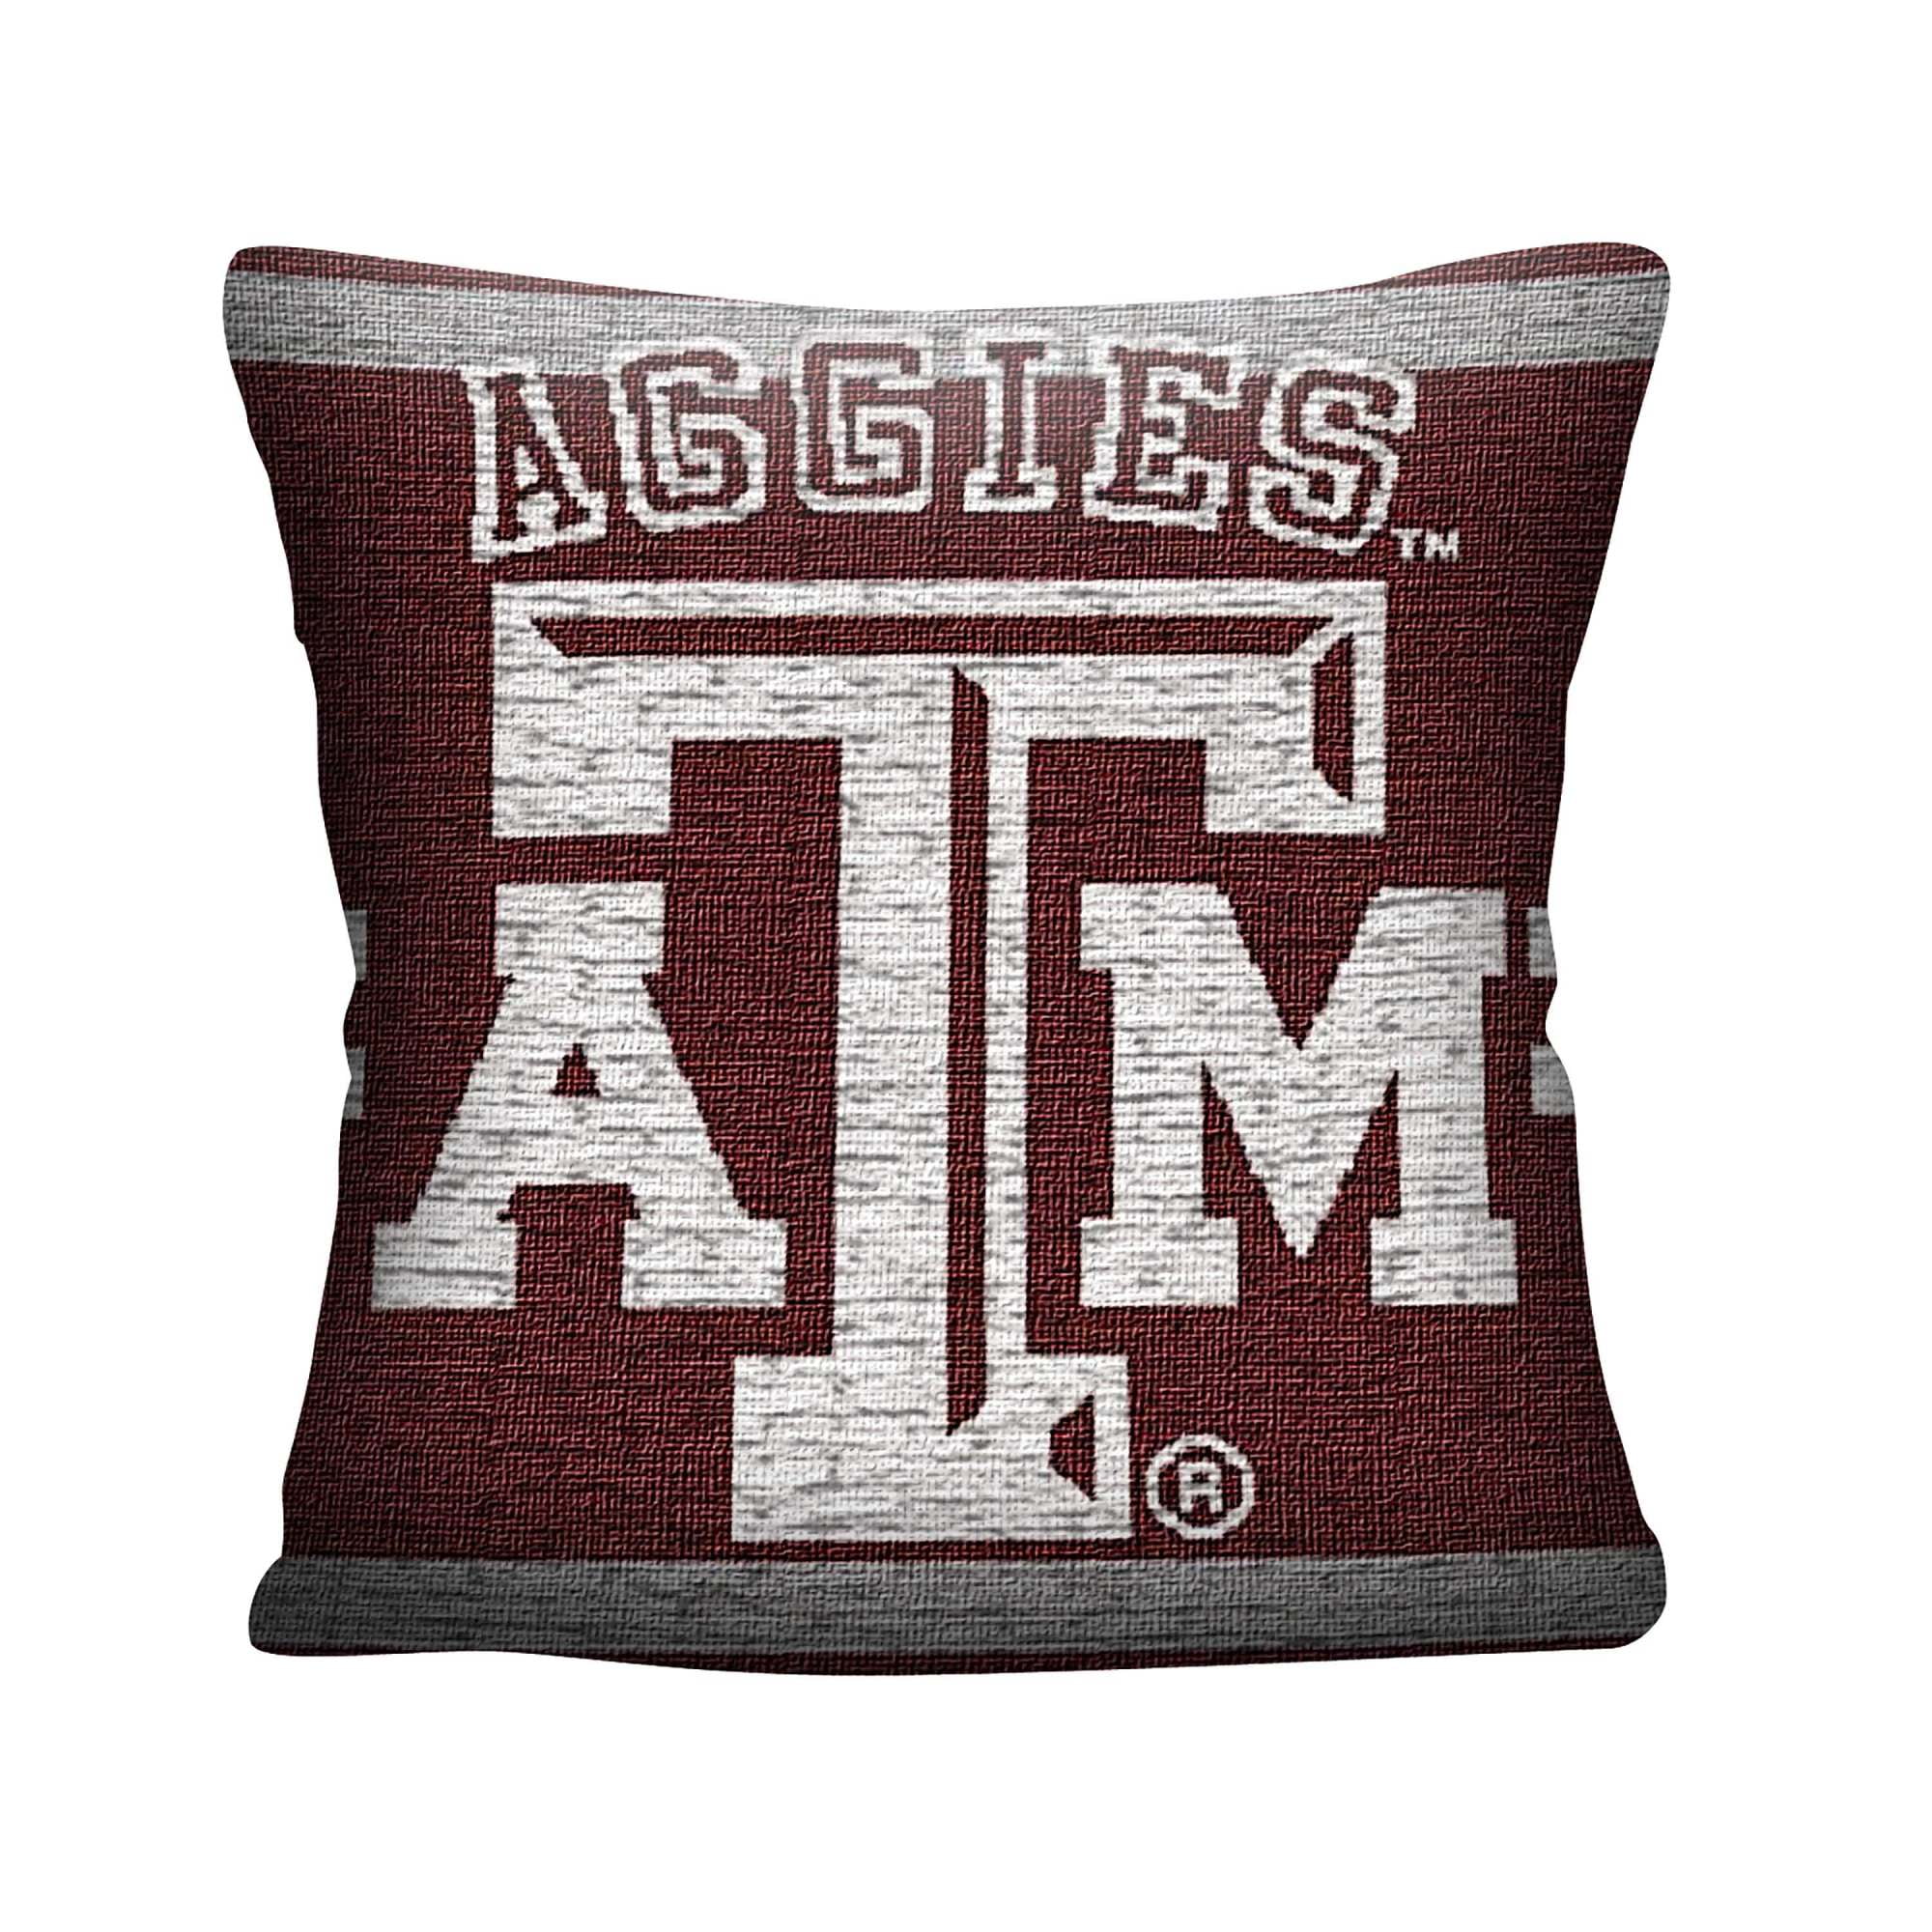 Texas A&M Aggies Pegasus Sports NCAA Team Americana Decorative Throw Pillow